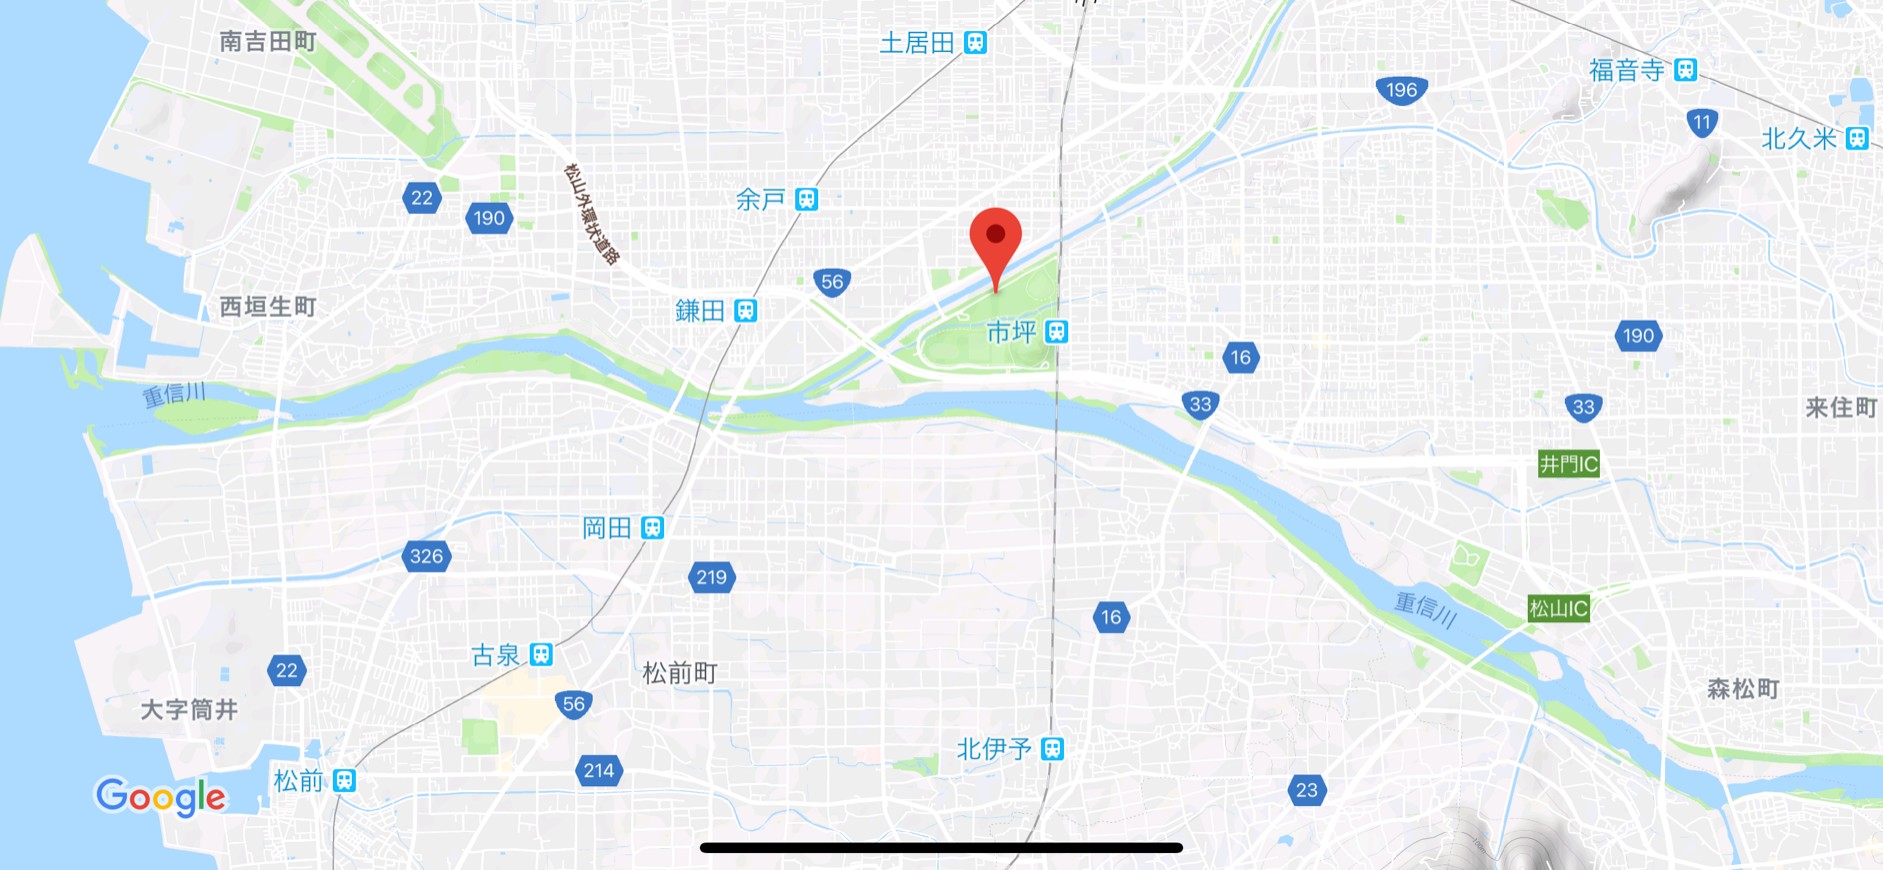 ONE OK ROCK 2019 – 2020 “Eye of the Storm” JAPAN TOUR 愛媛県武道館 地図2